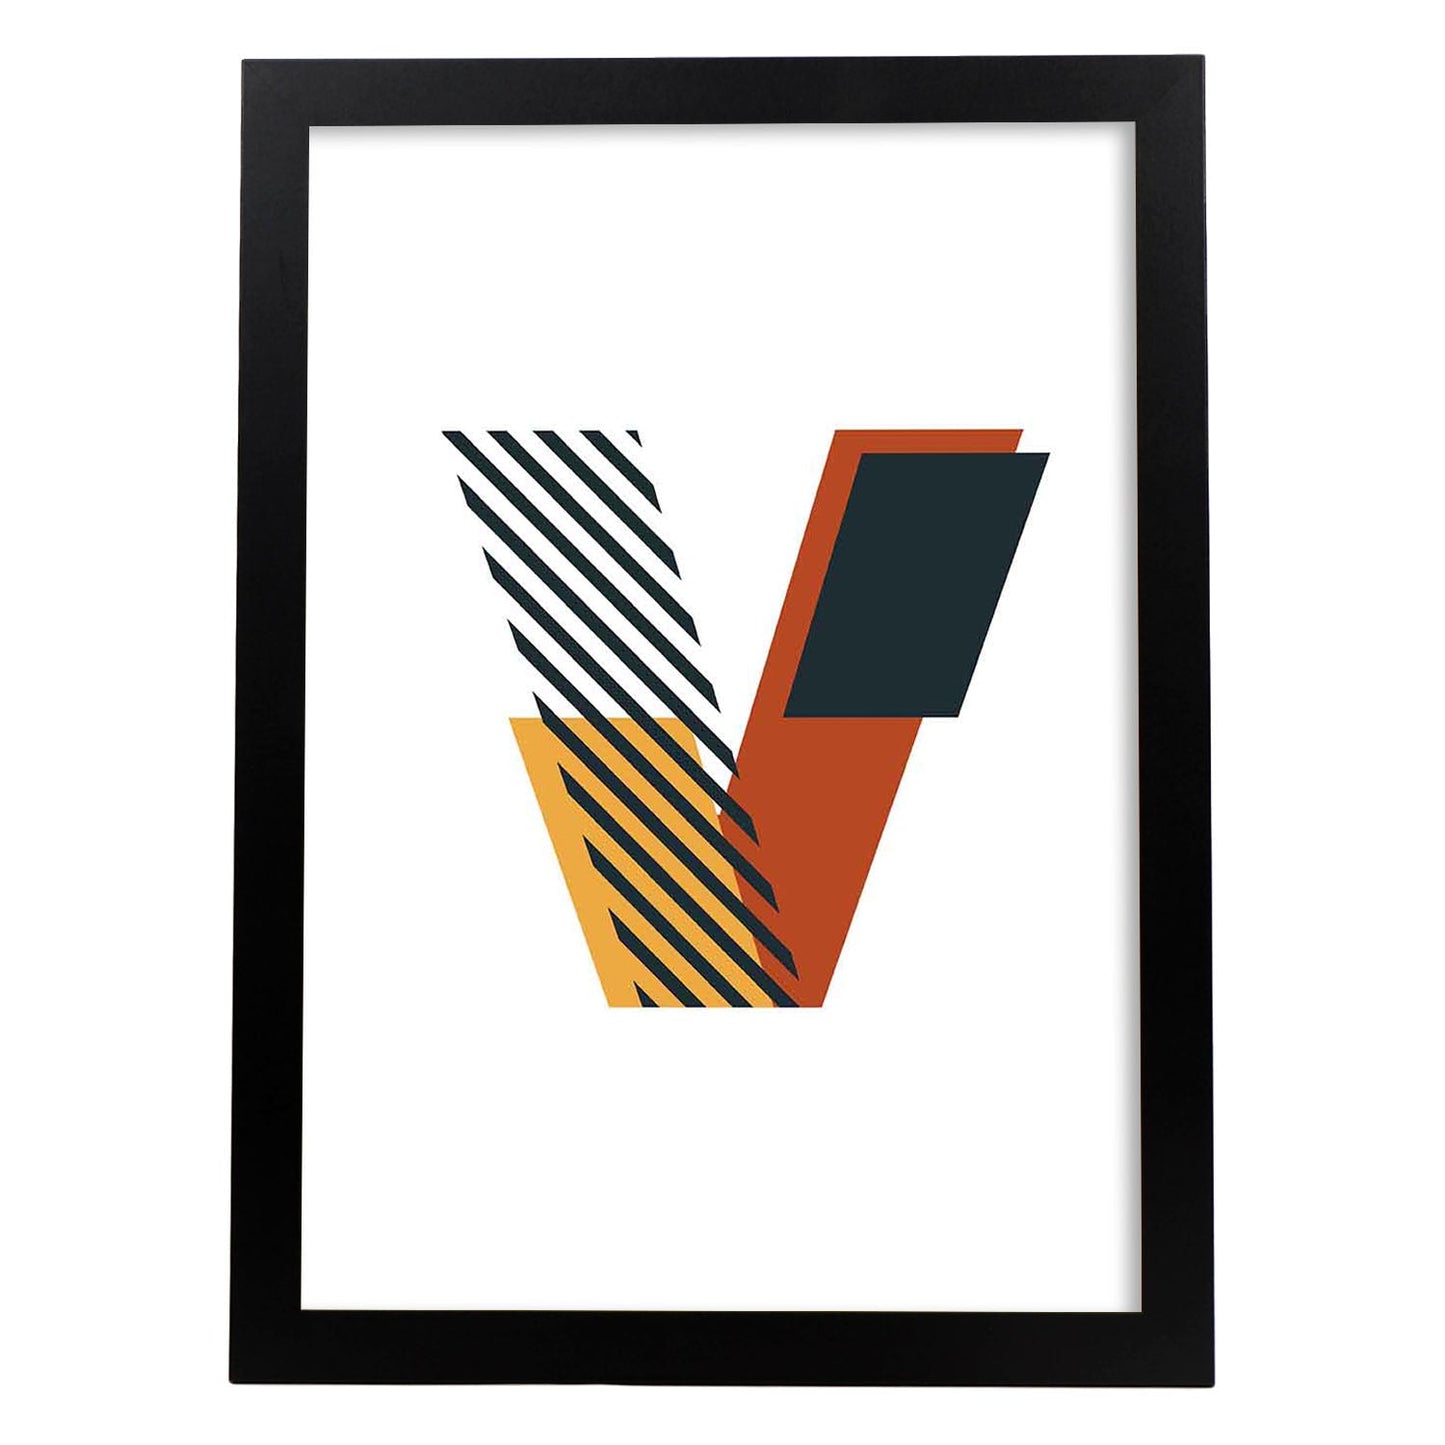 Poster de letra V. Lámina estilo Geometria con imágenes del alfabeto.-Artwork-Nacnic-A4-Marco Negro-Nacnic Estudio SL